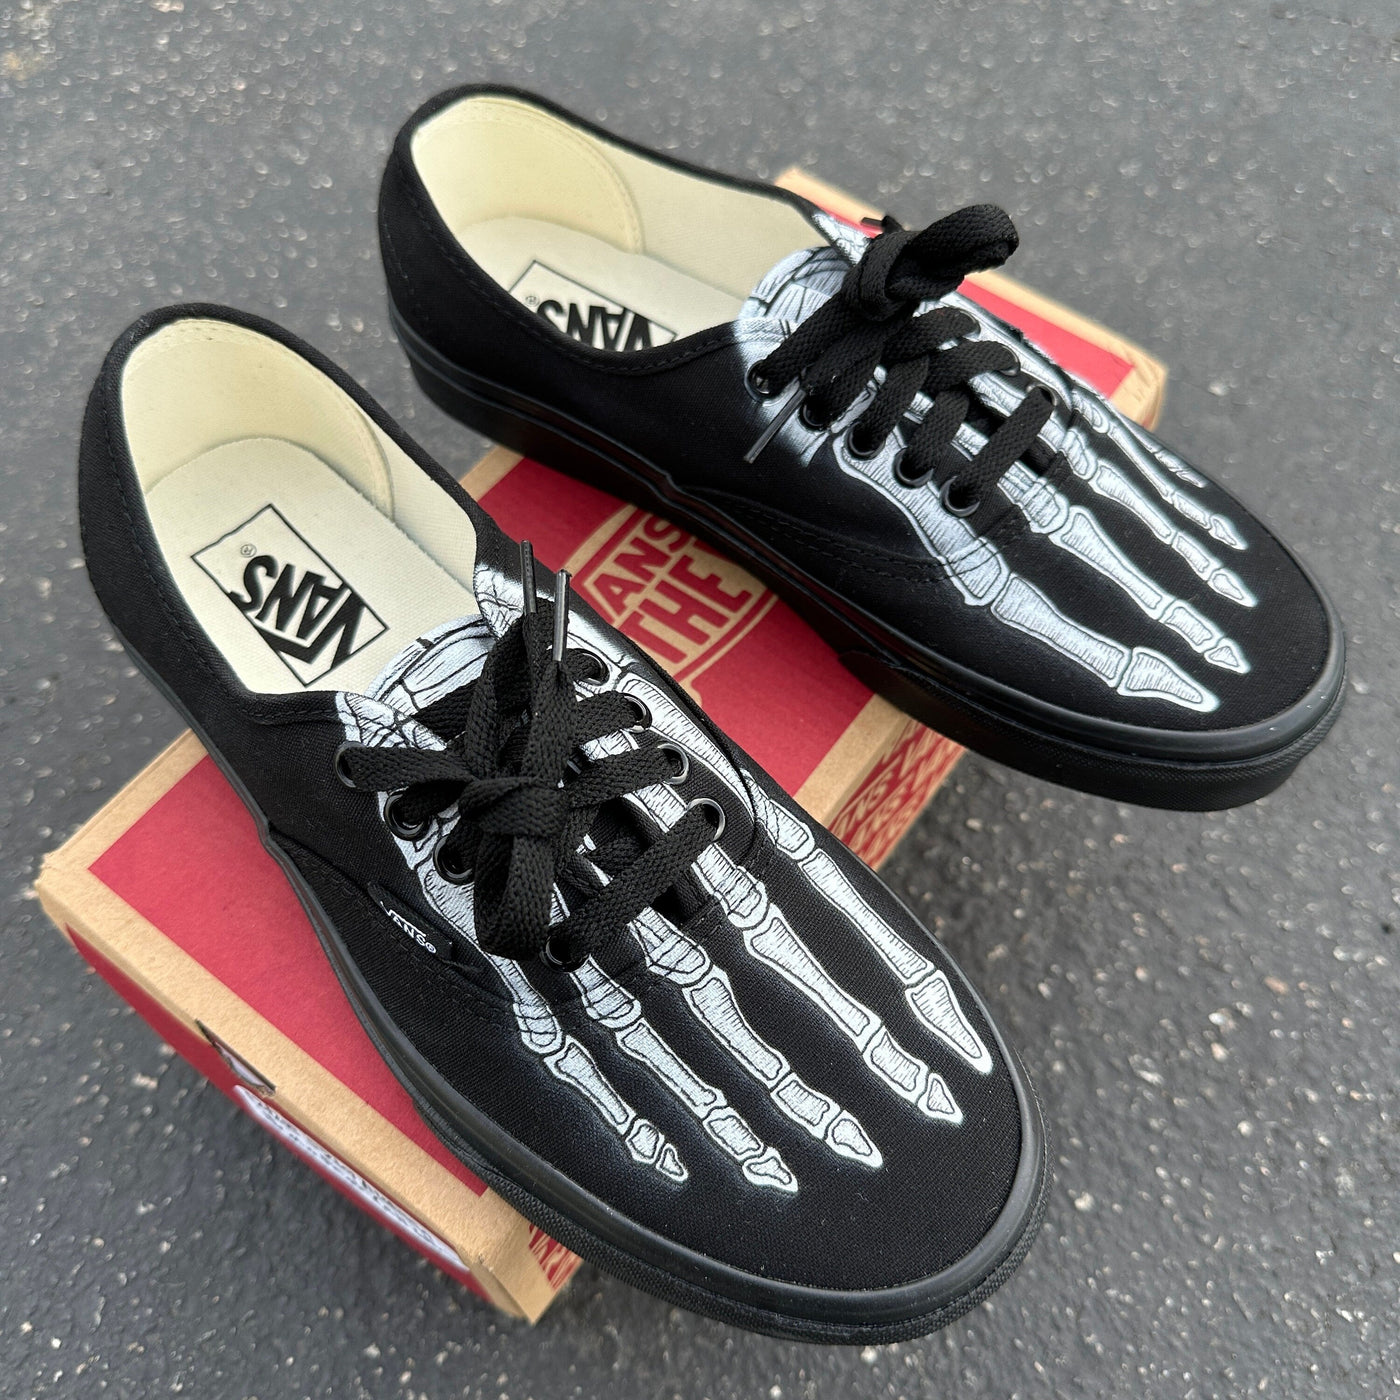 Custom Skeleton Feet X Ray Black Black Vans Authentic Lace Up Shoes